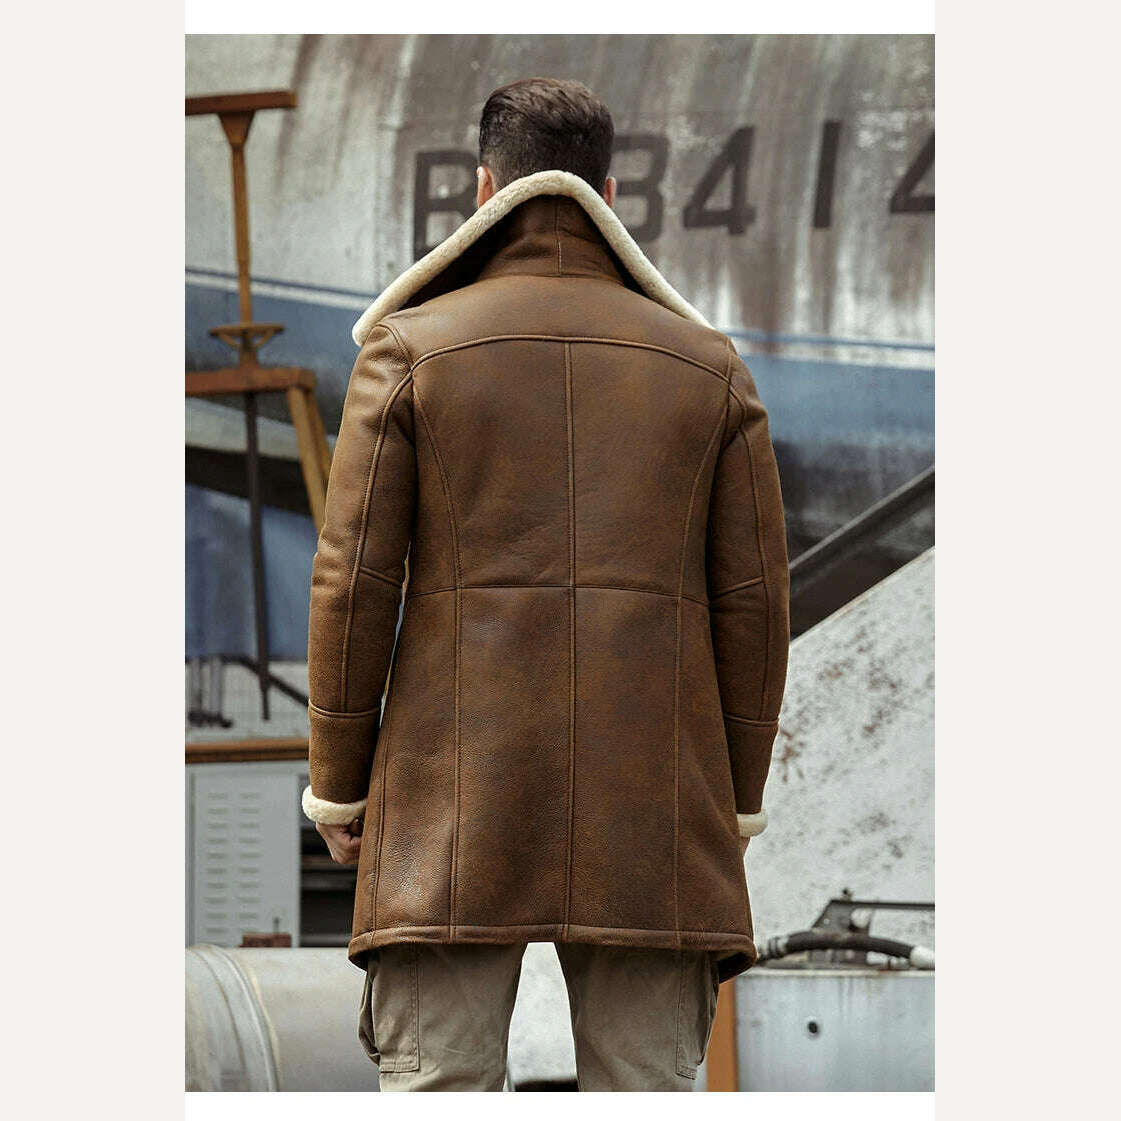 KIMLUD, Men's Plus size Fur Shearling Sheepskin Genuine Leather Long Coat Males Thick Winter Warm Handmade Aviator Coat Outerwear Jacket, KIMLUD Women's Clothes